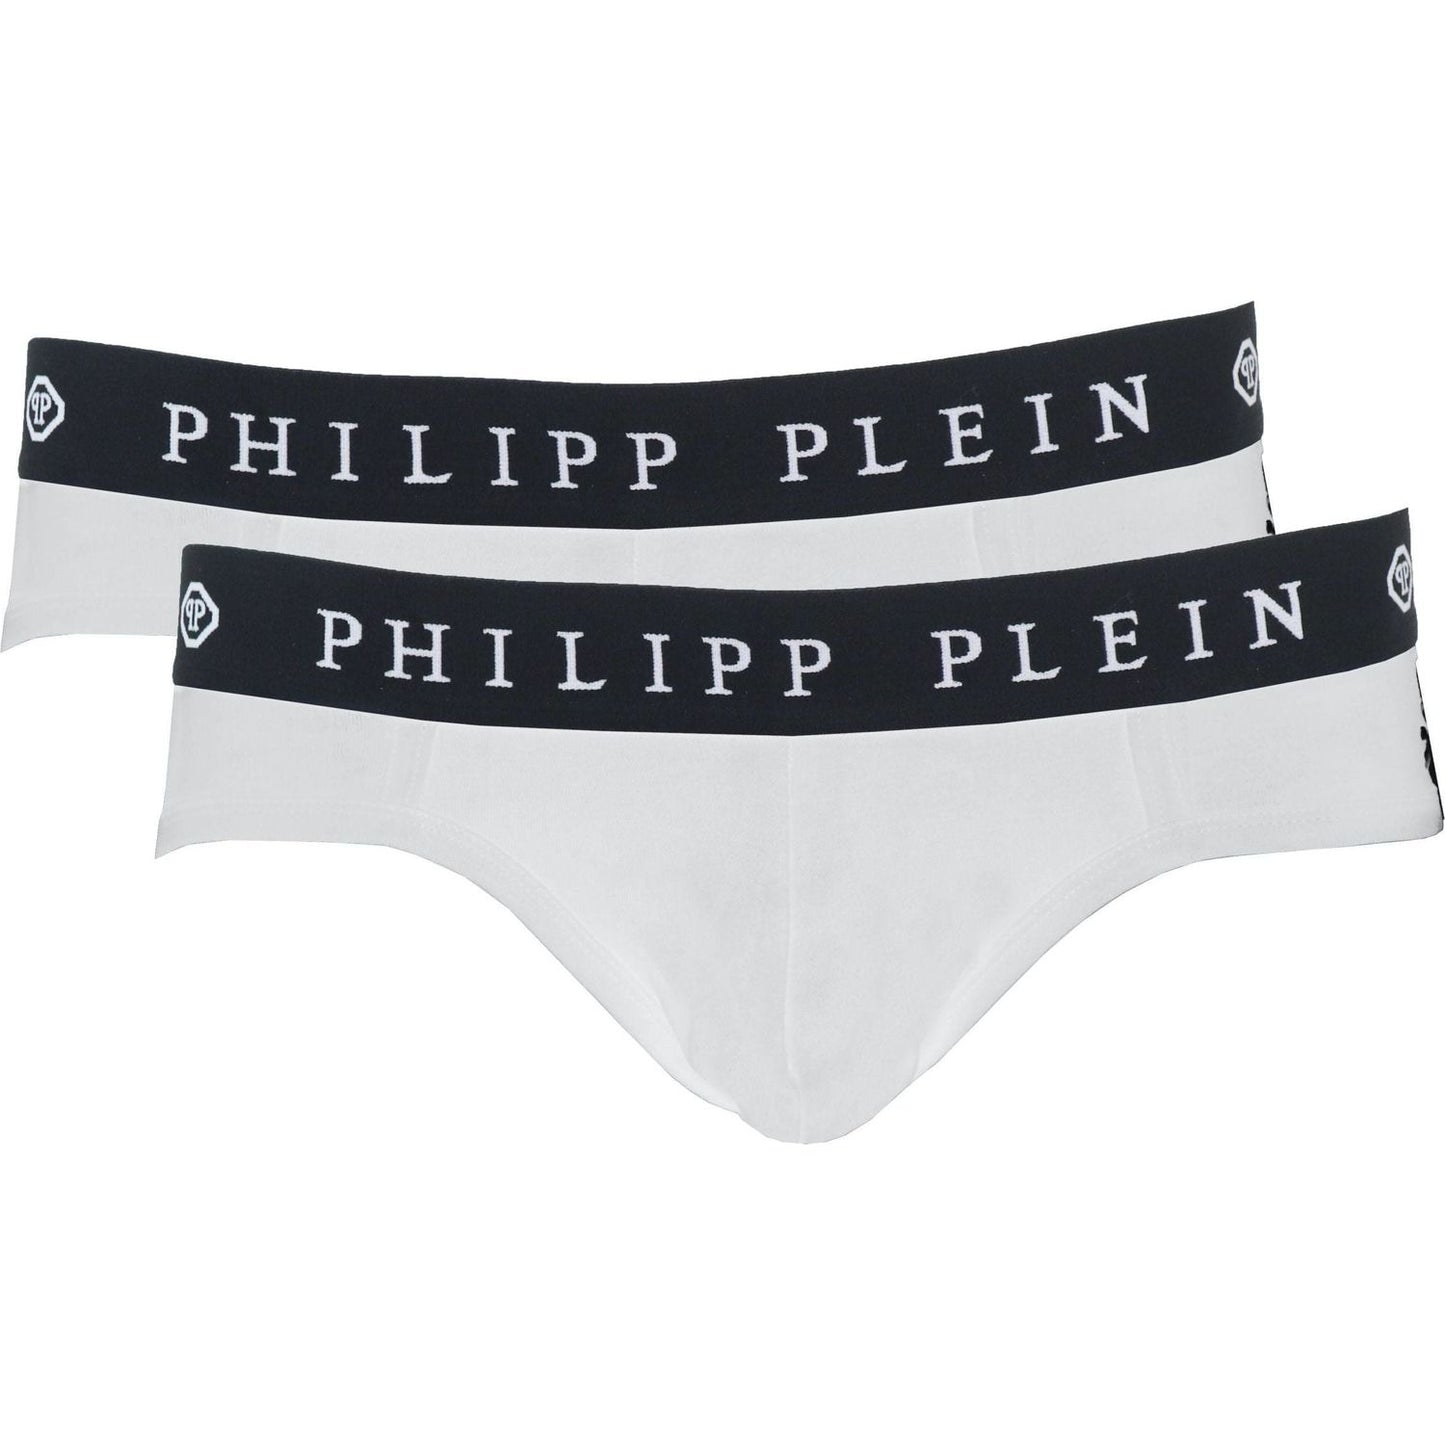 Philipp Plein Elevated White Boxer Shorts Twin-Pack slipbipack-bianco-philipp-plein-underwear product-6416-1203567087-1-scaled-f50516dd-266.jpg